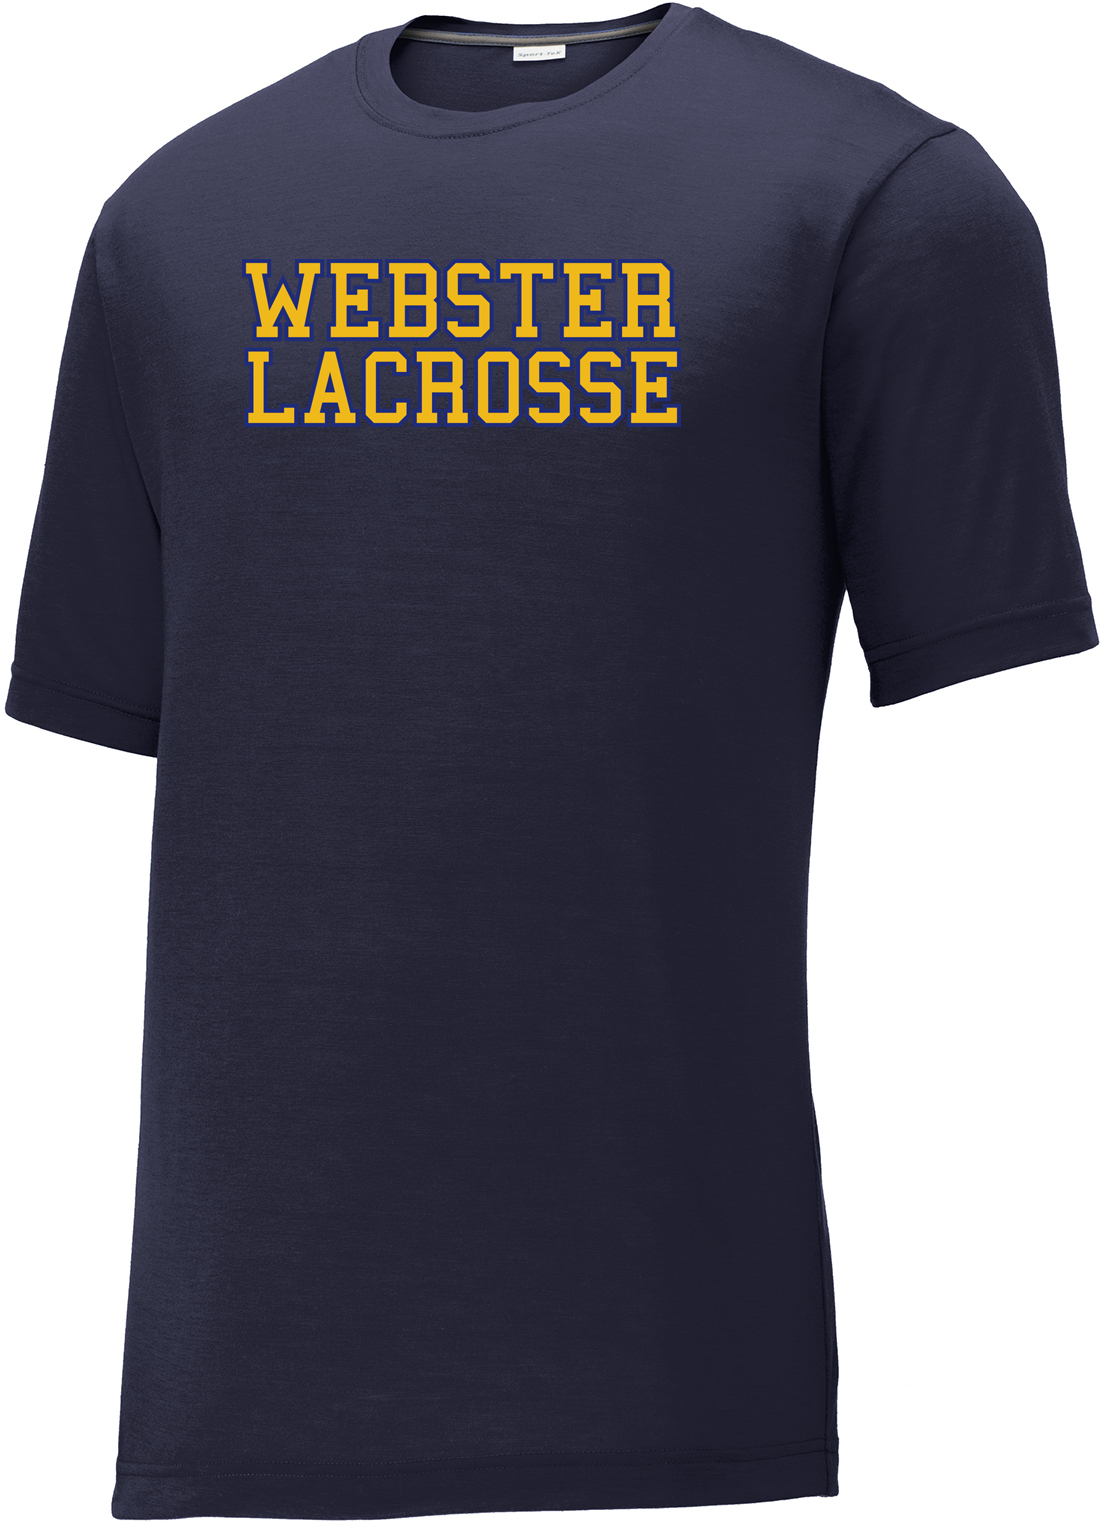 Webster Lacrosse Men's Navy CottonTouch Performance T-Shirt